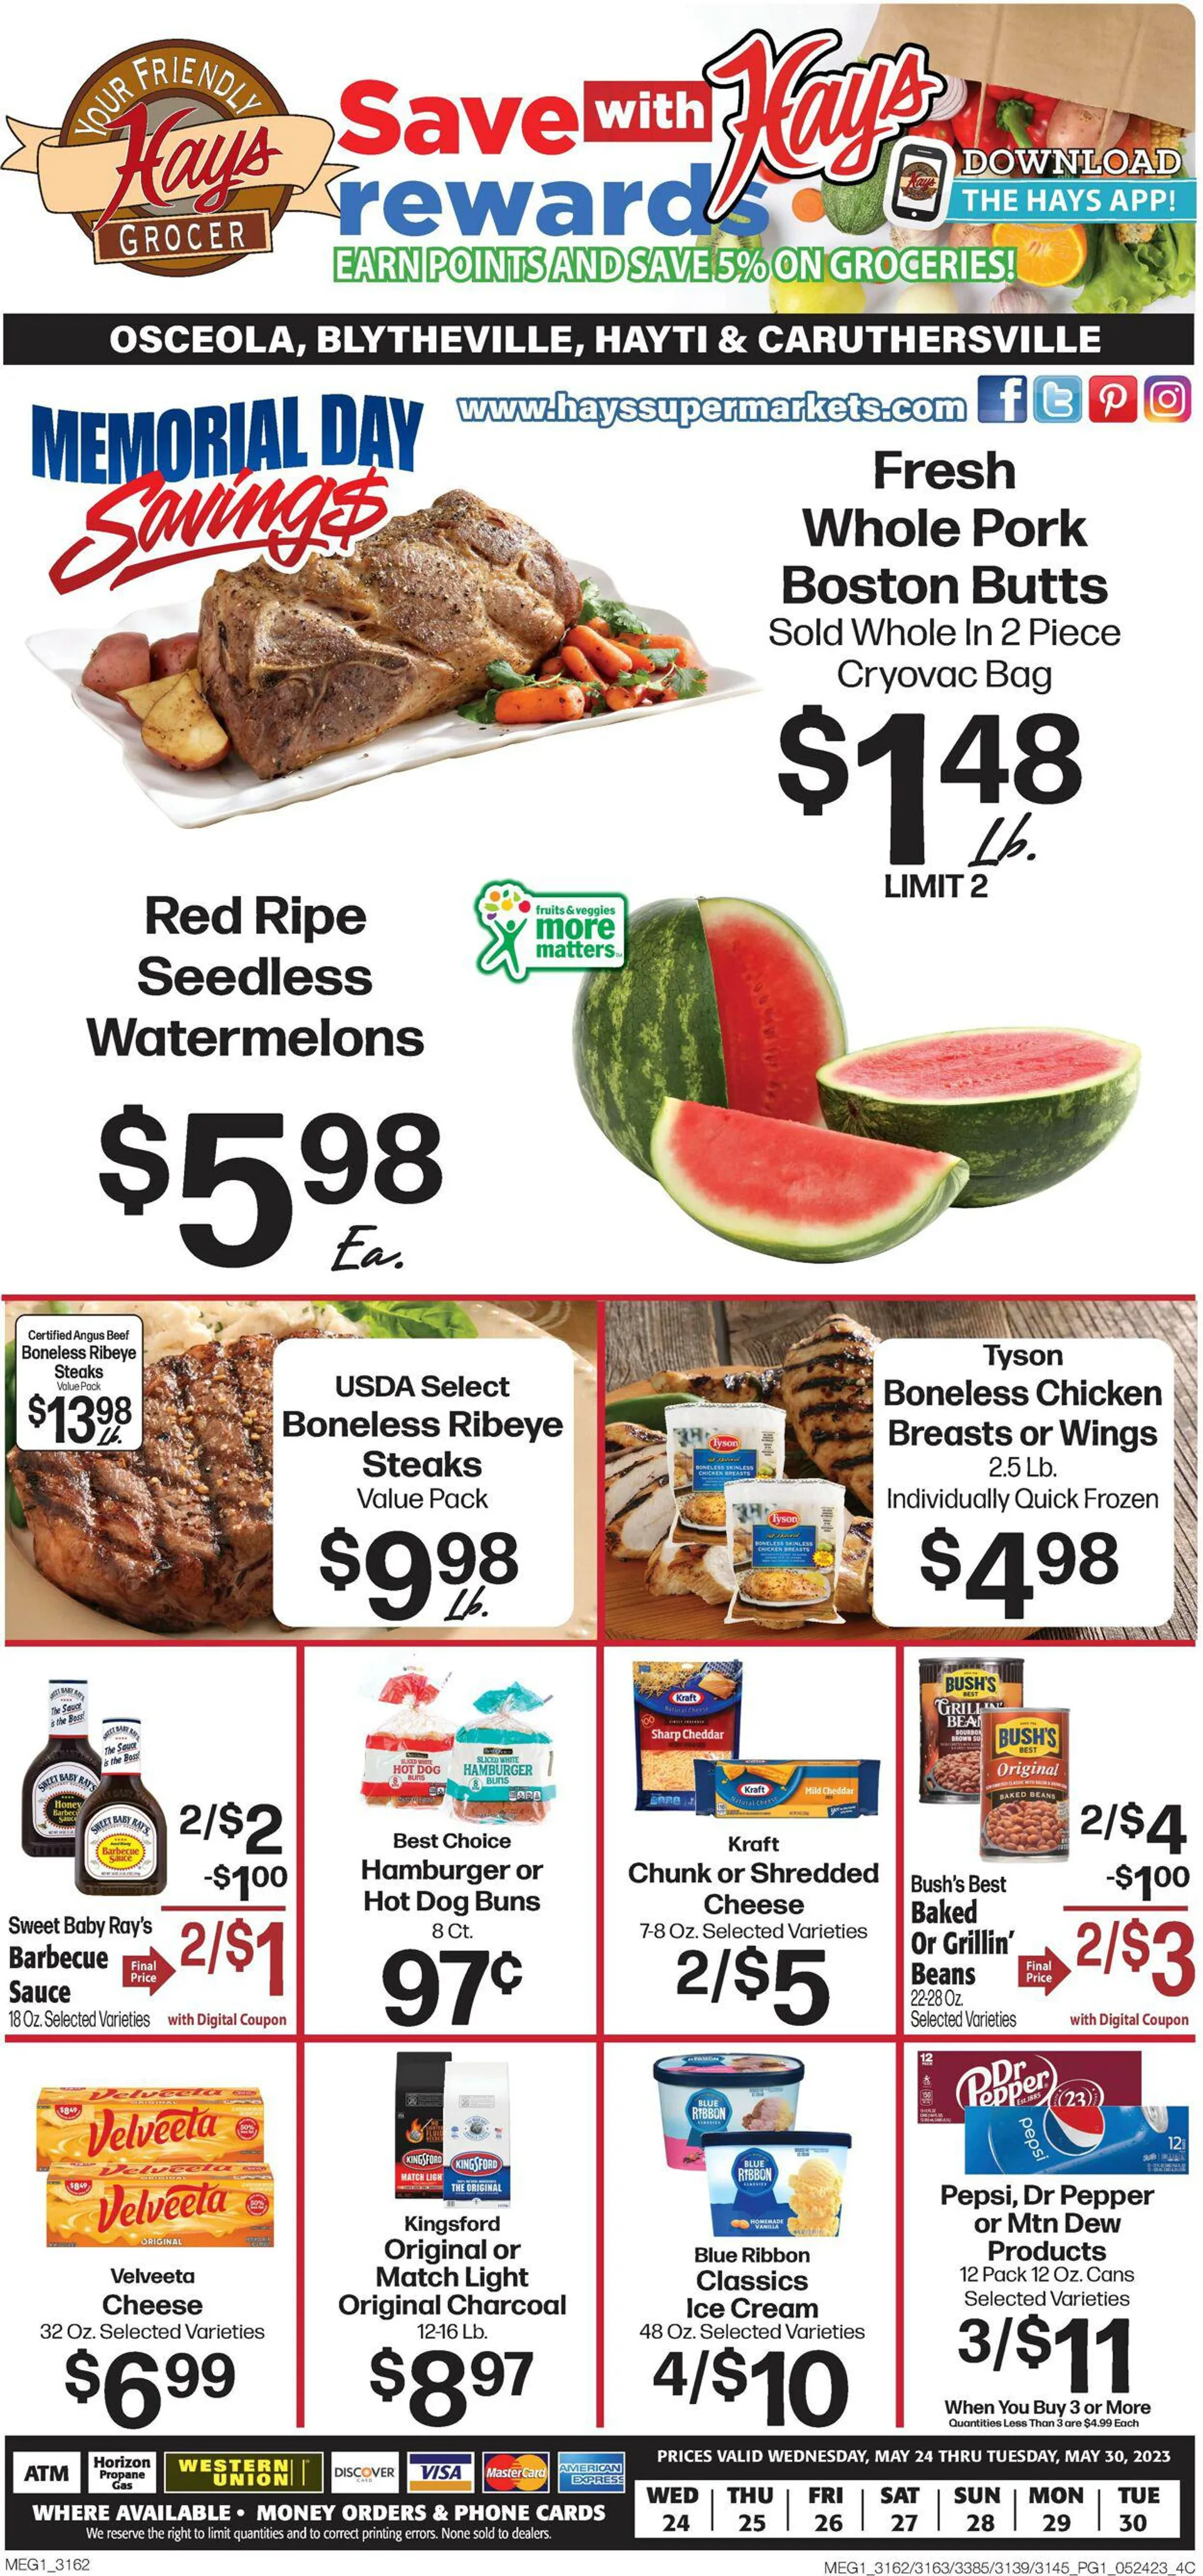 Hays Supermarket Current weekly ad - 3